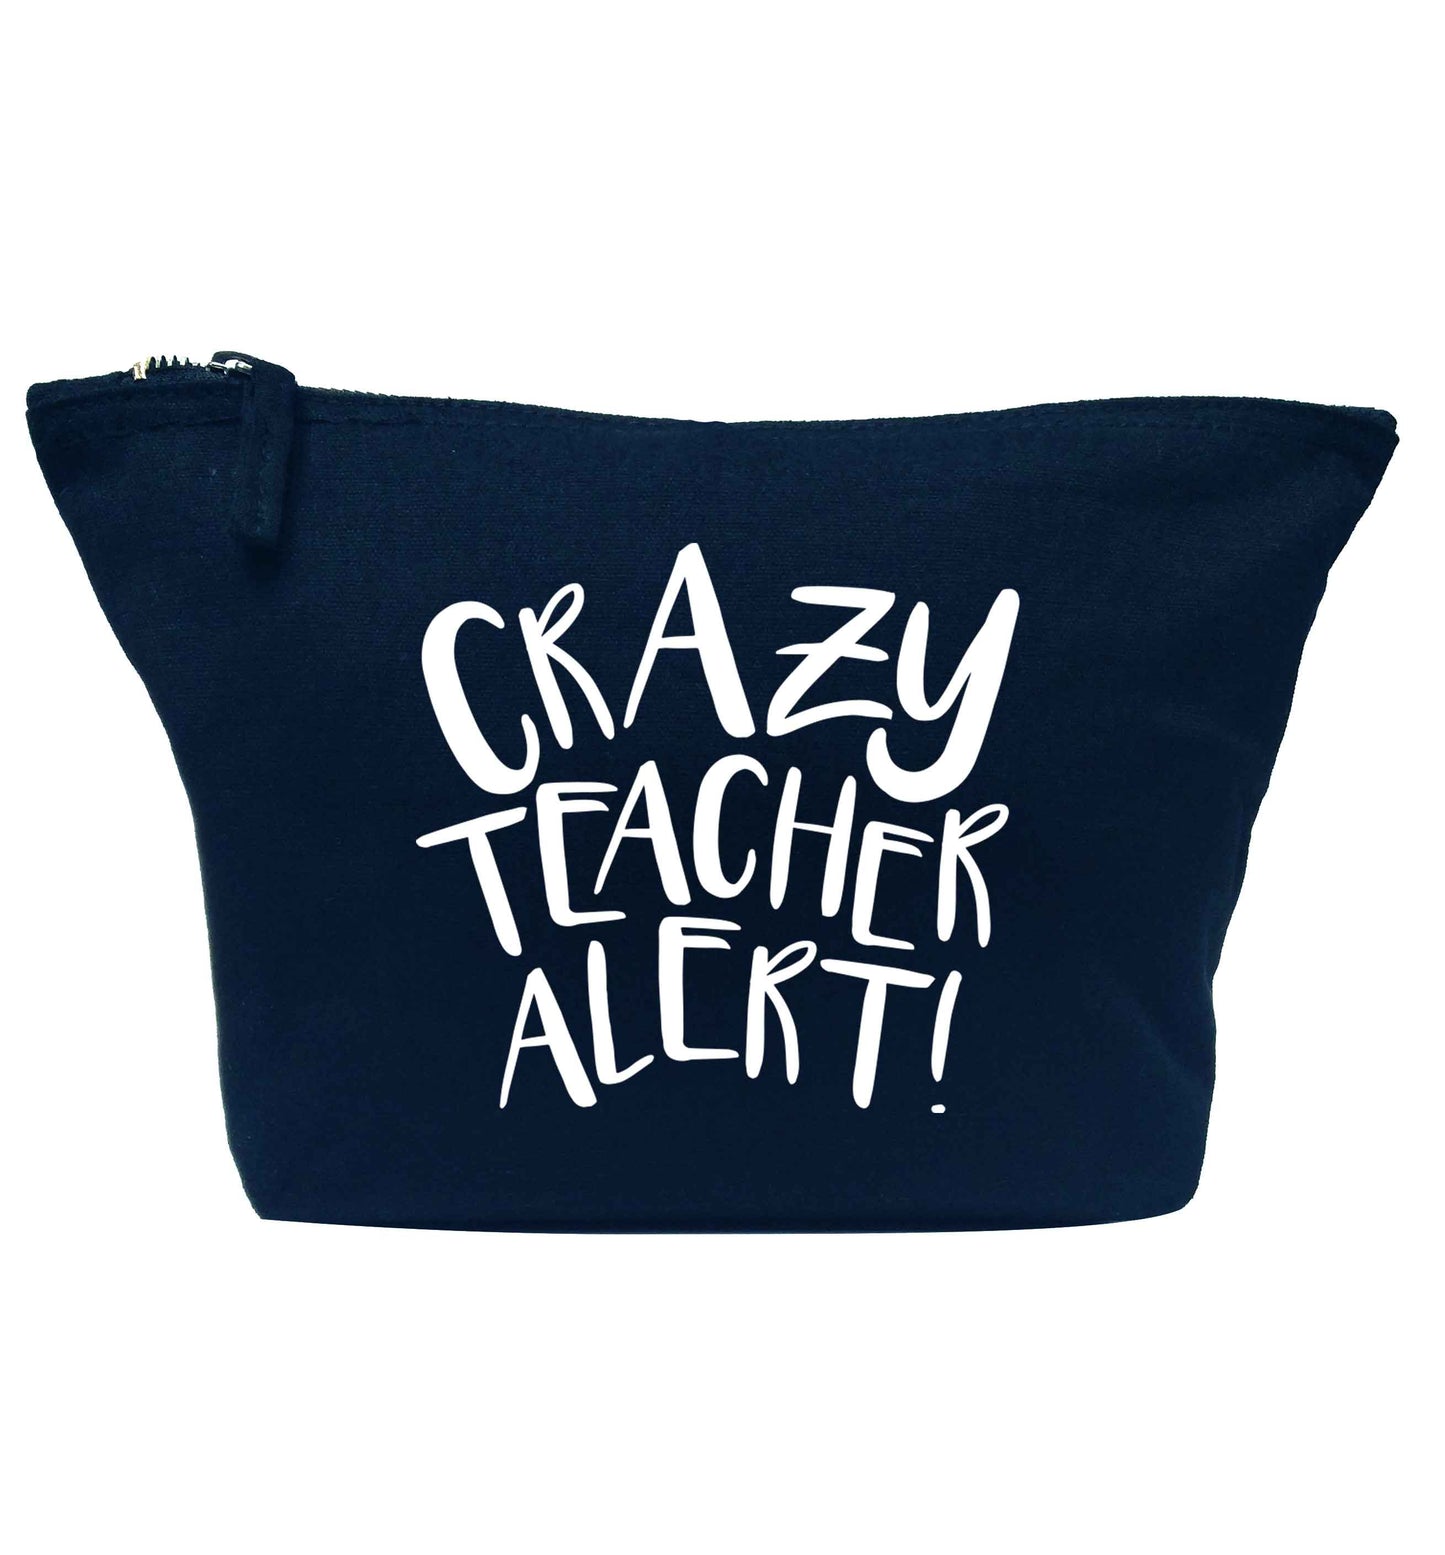 Crazy teacher alert navy makeup bag